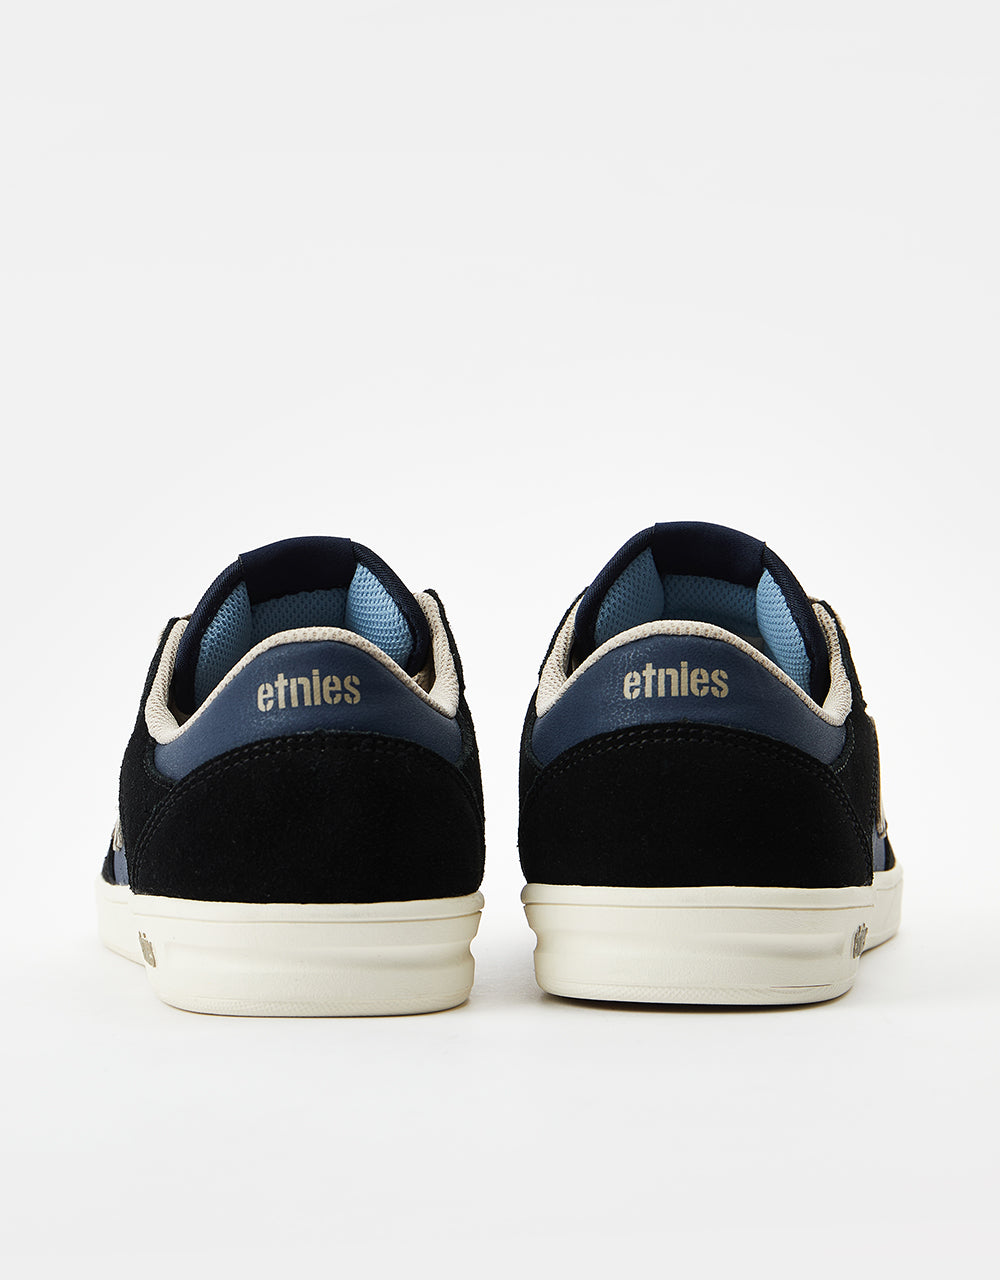 Etnies Windrow Skate Shoes - Black/Navy/Grey